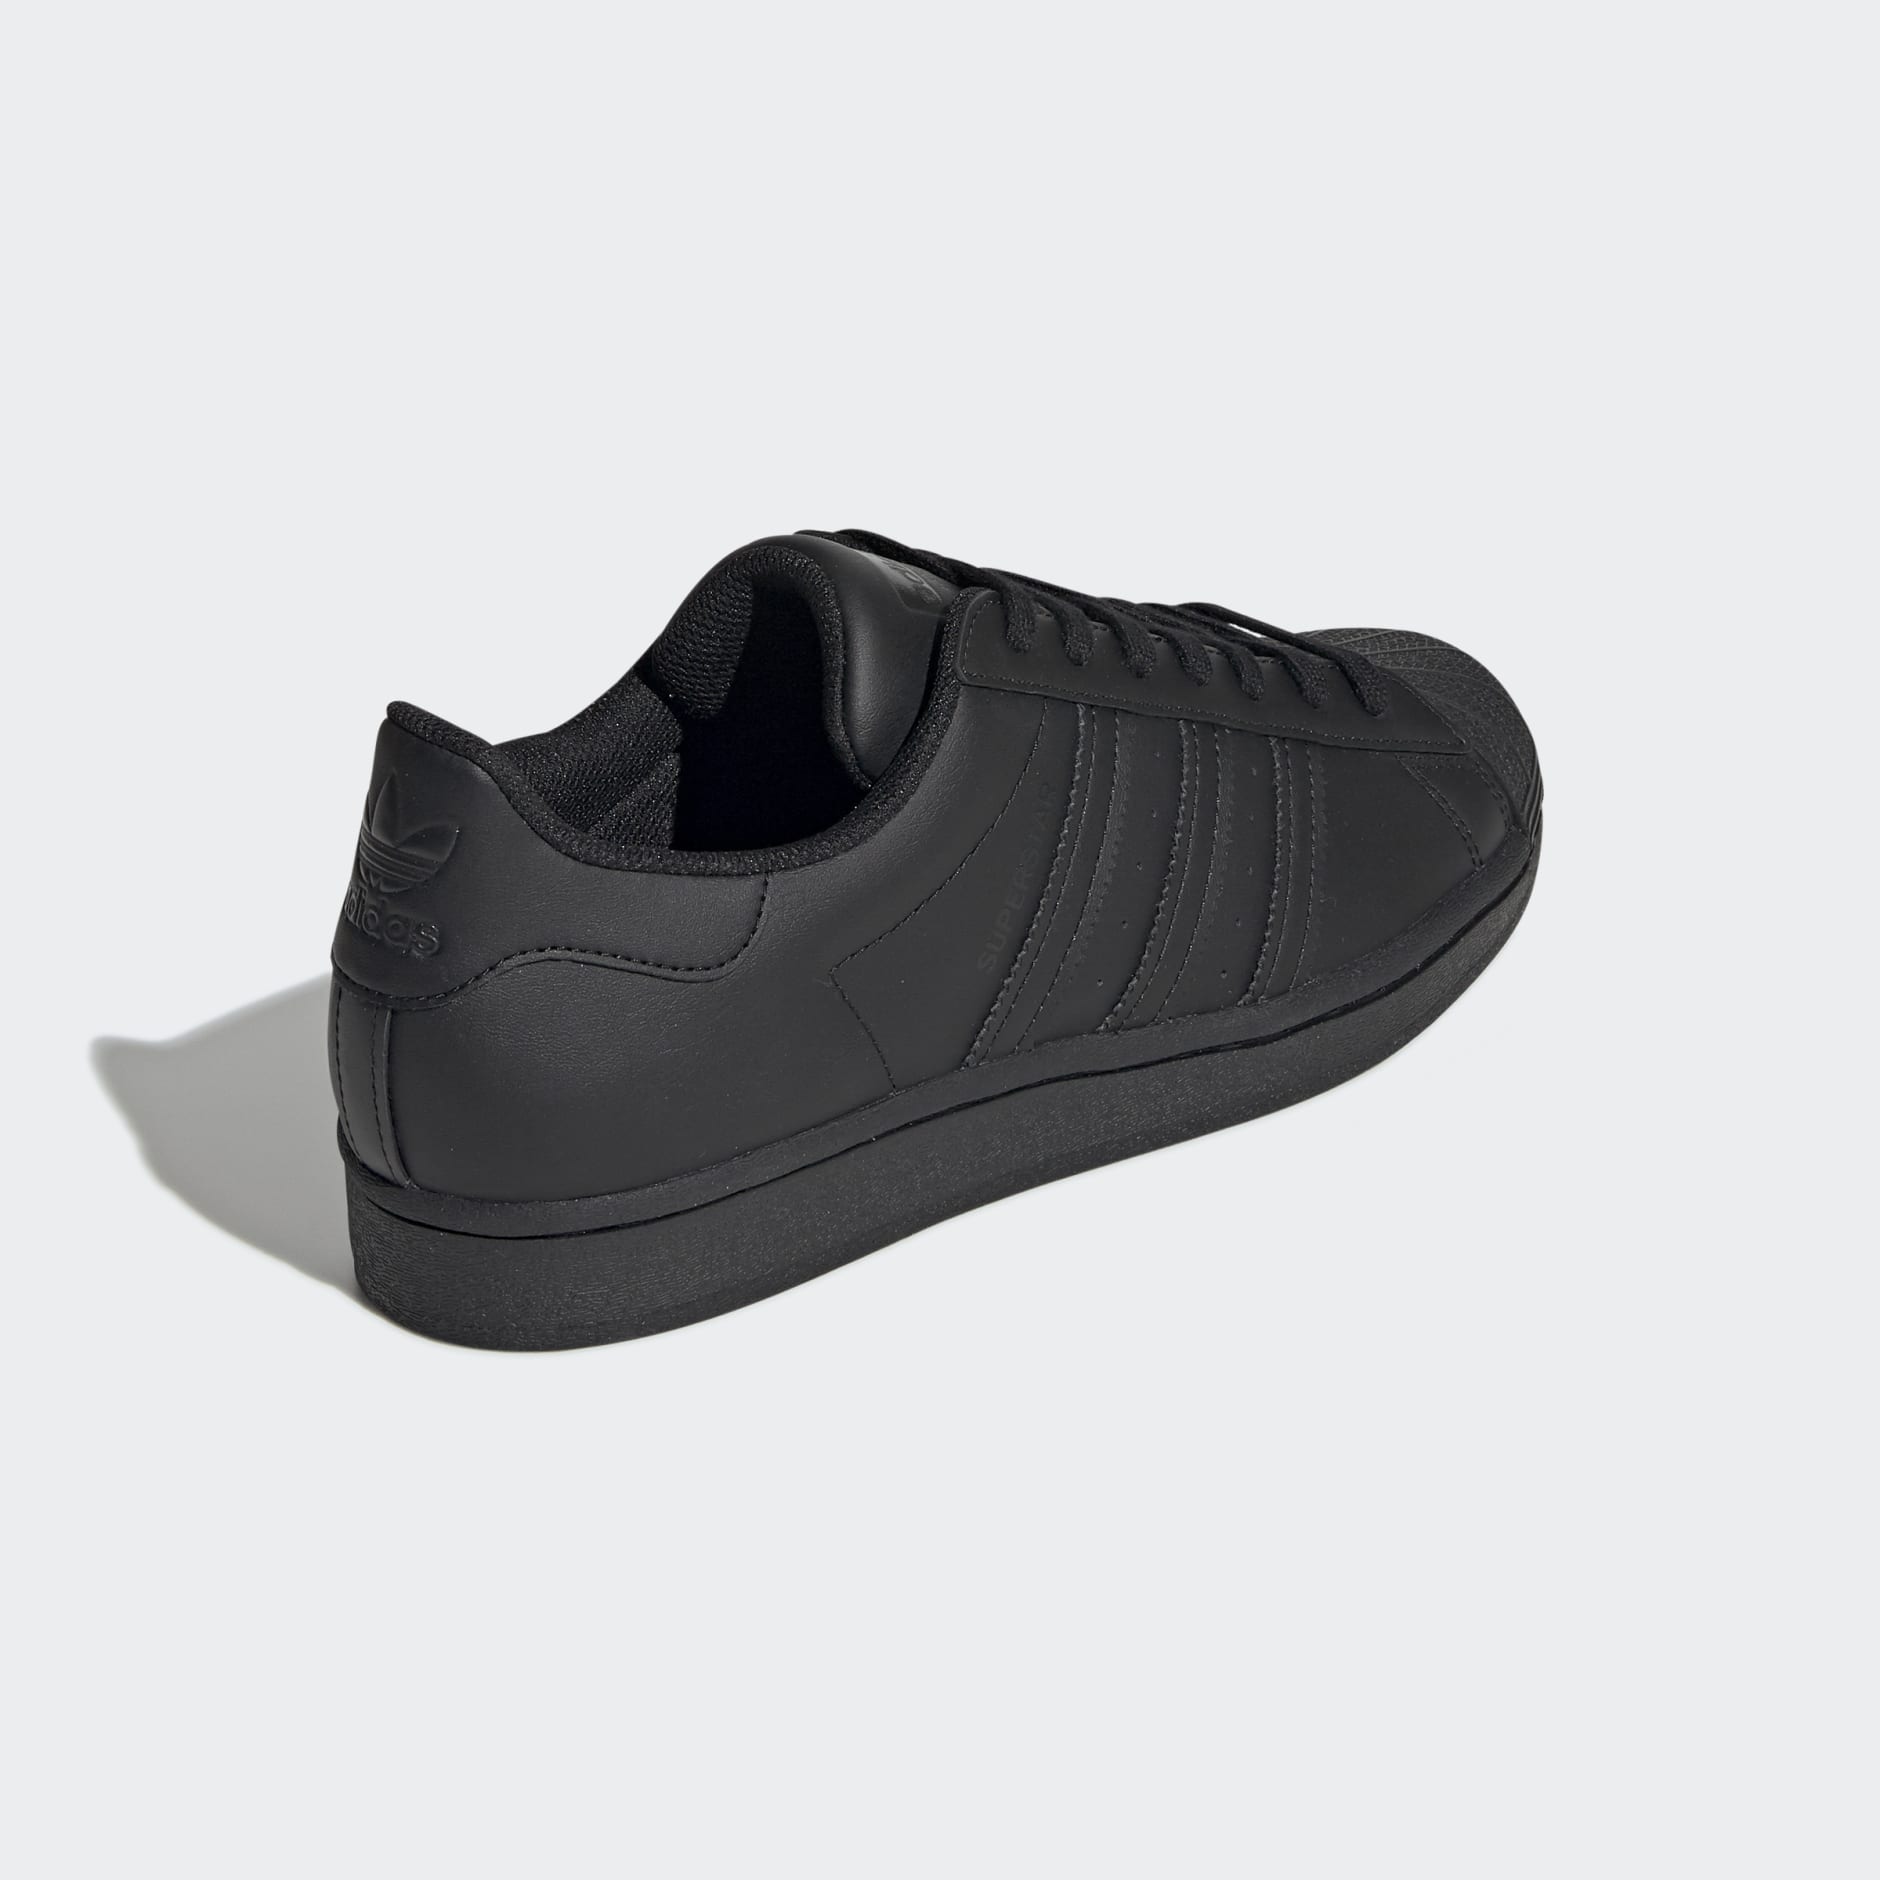 Shoes - Superstar Shoes - Black | adidas Qatar